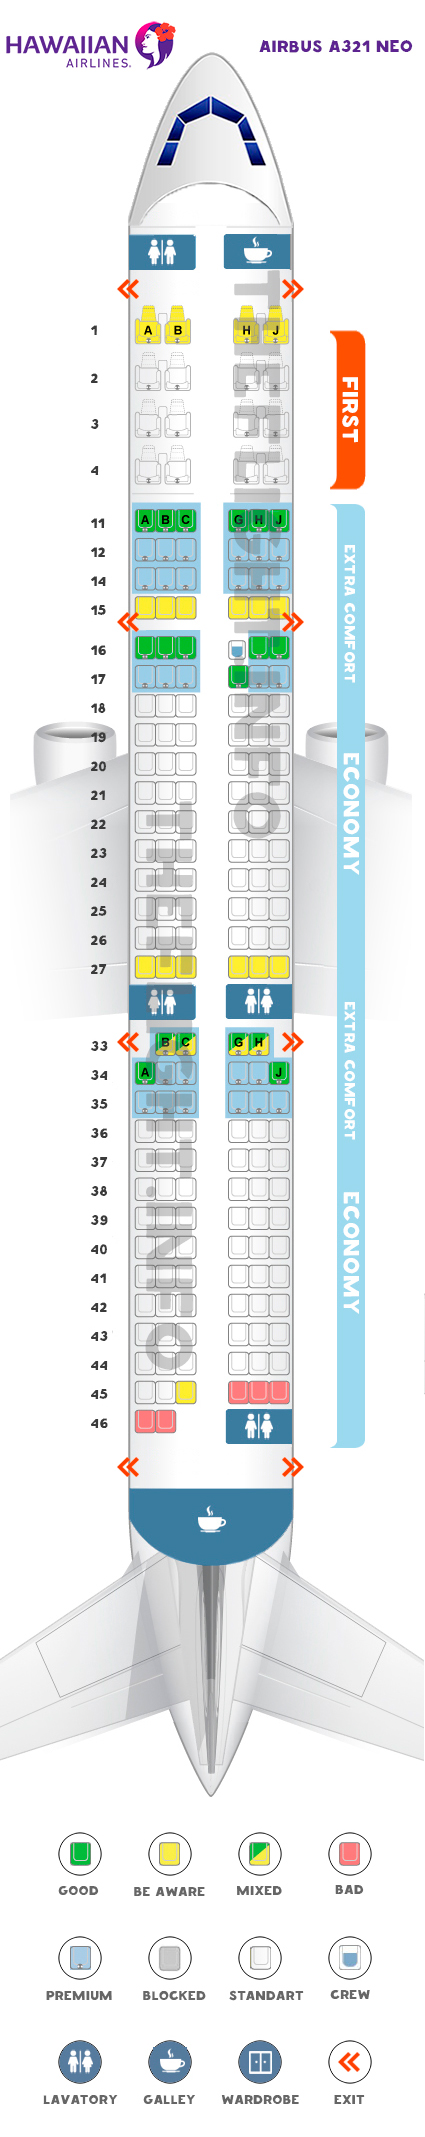 Airbus 21n Seating Chart